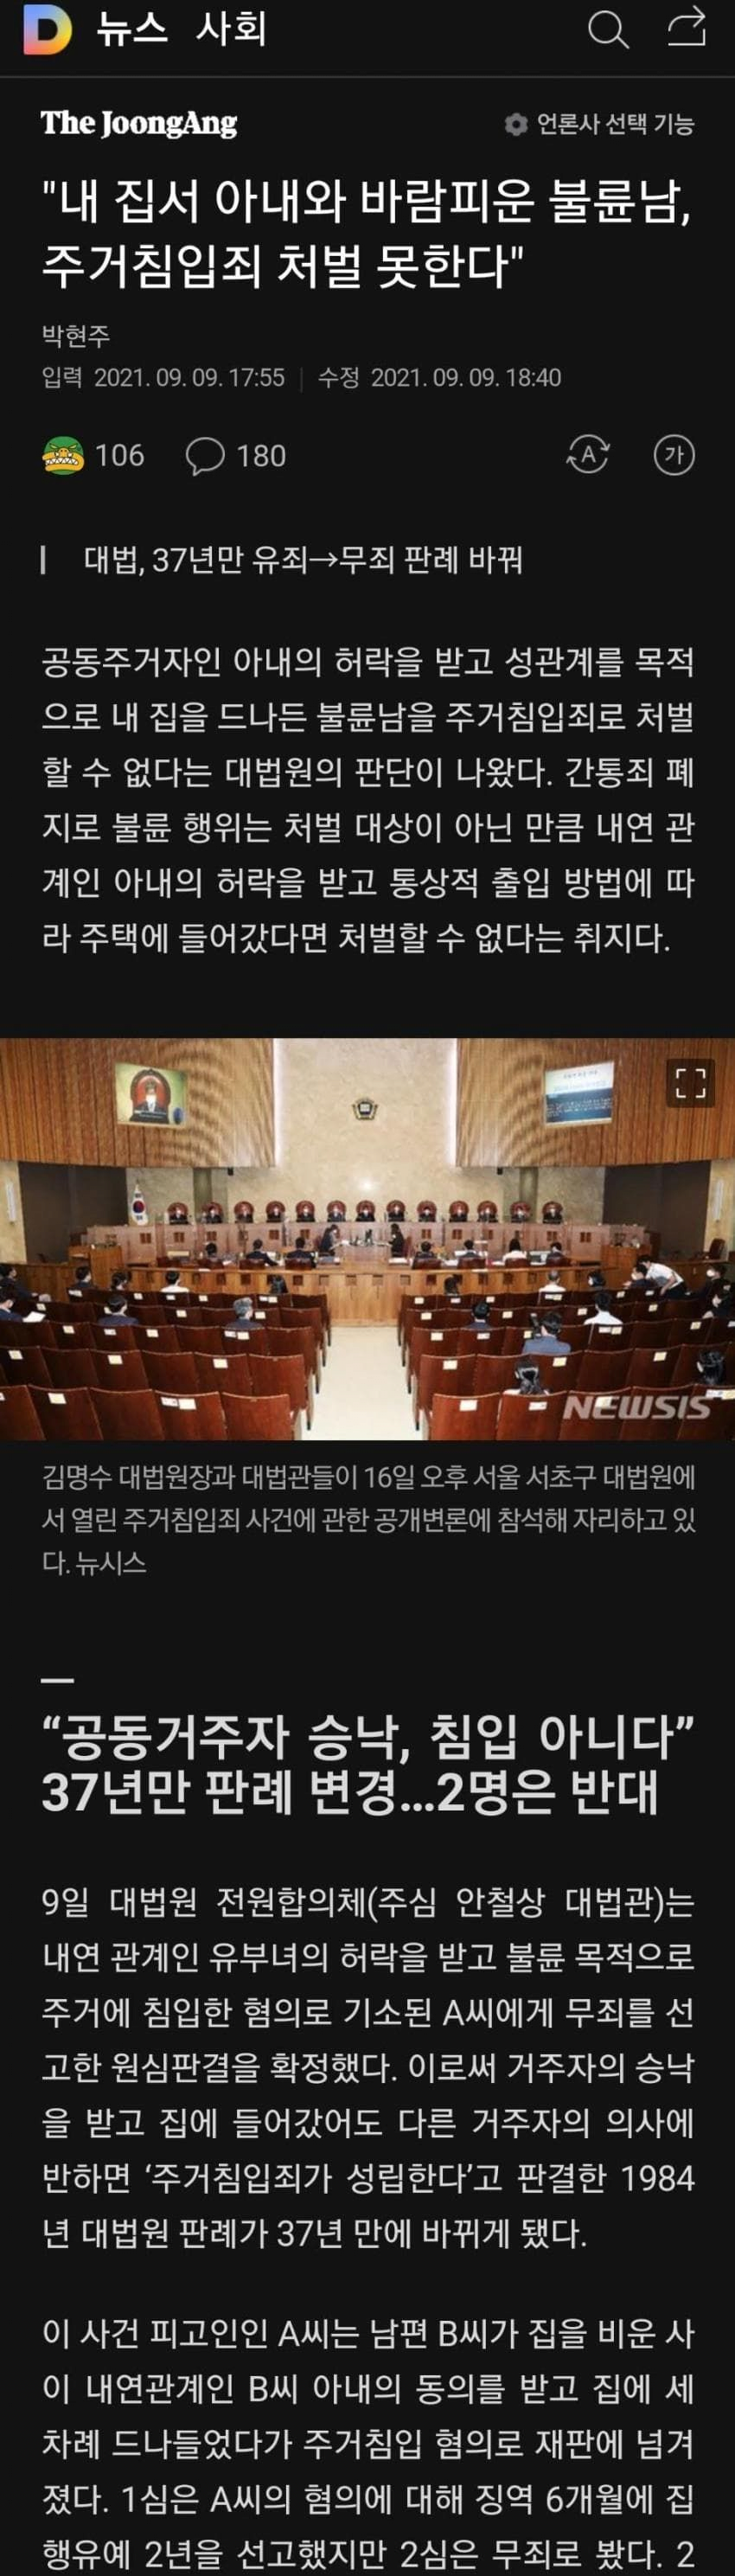 image.png 설거지 결혼 유부남 오열... "불륜 합법화"